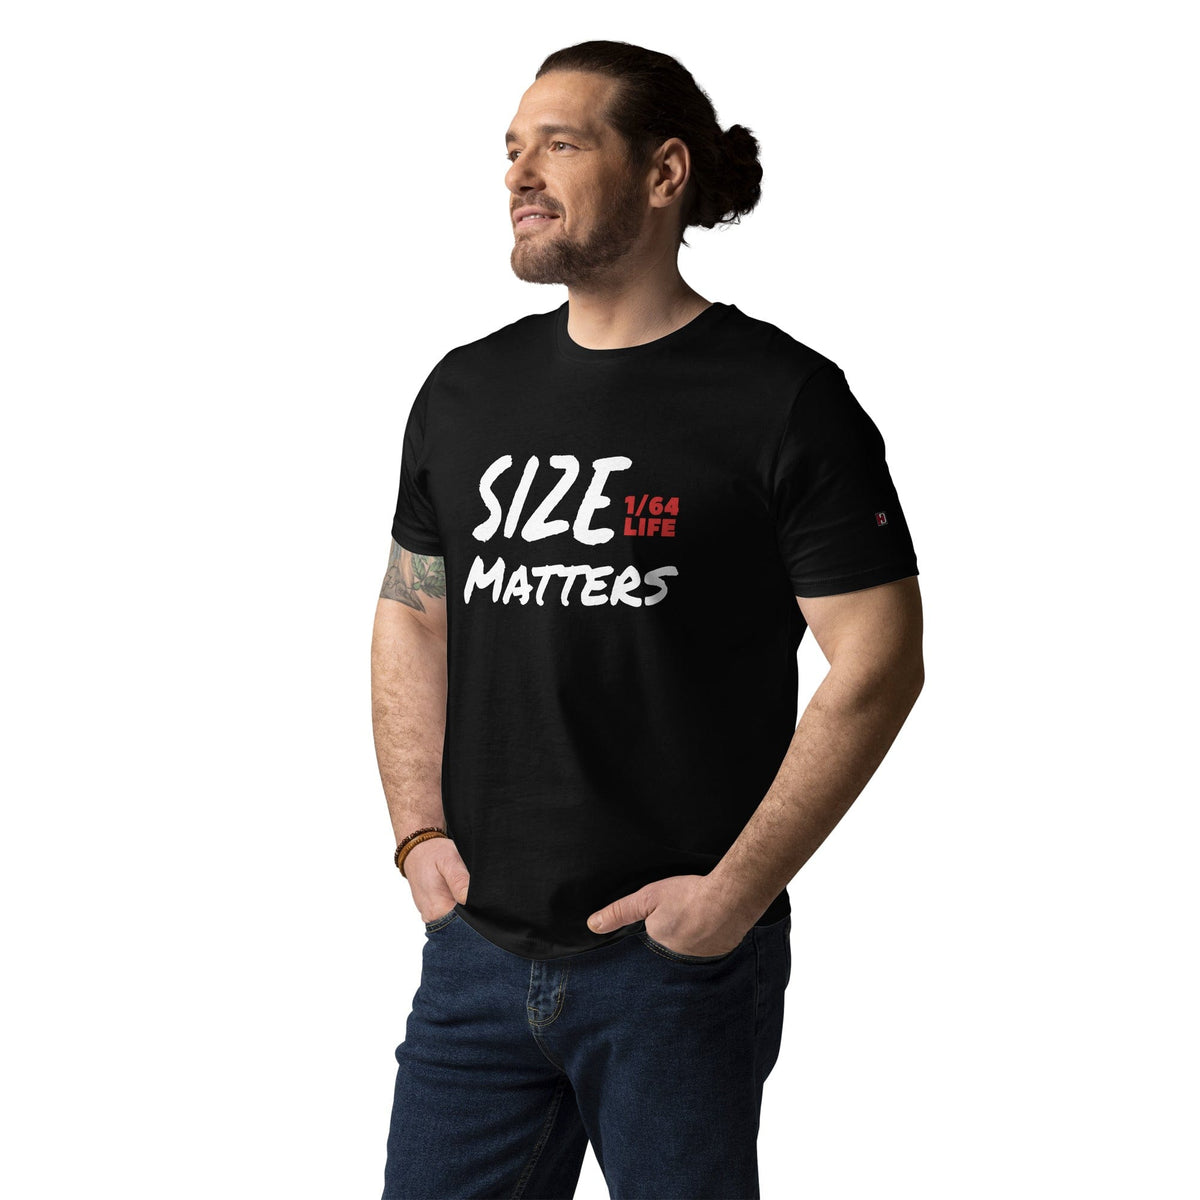 Size Matters 1/64 Life series T-Shirt Black